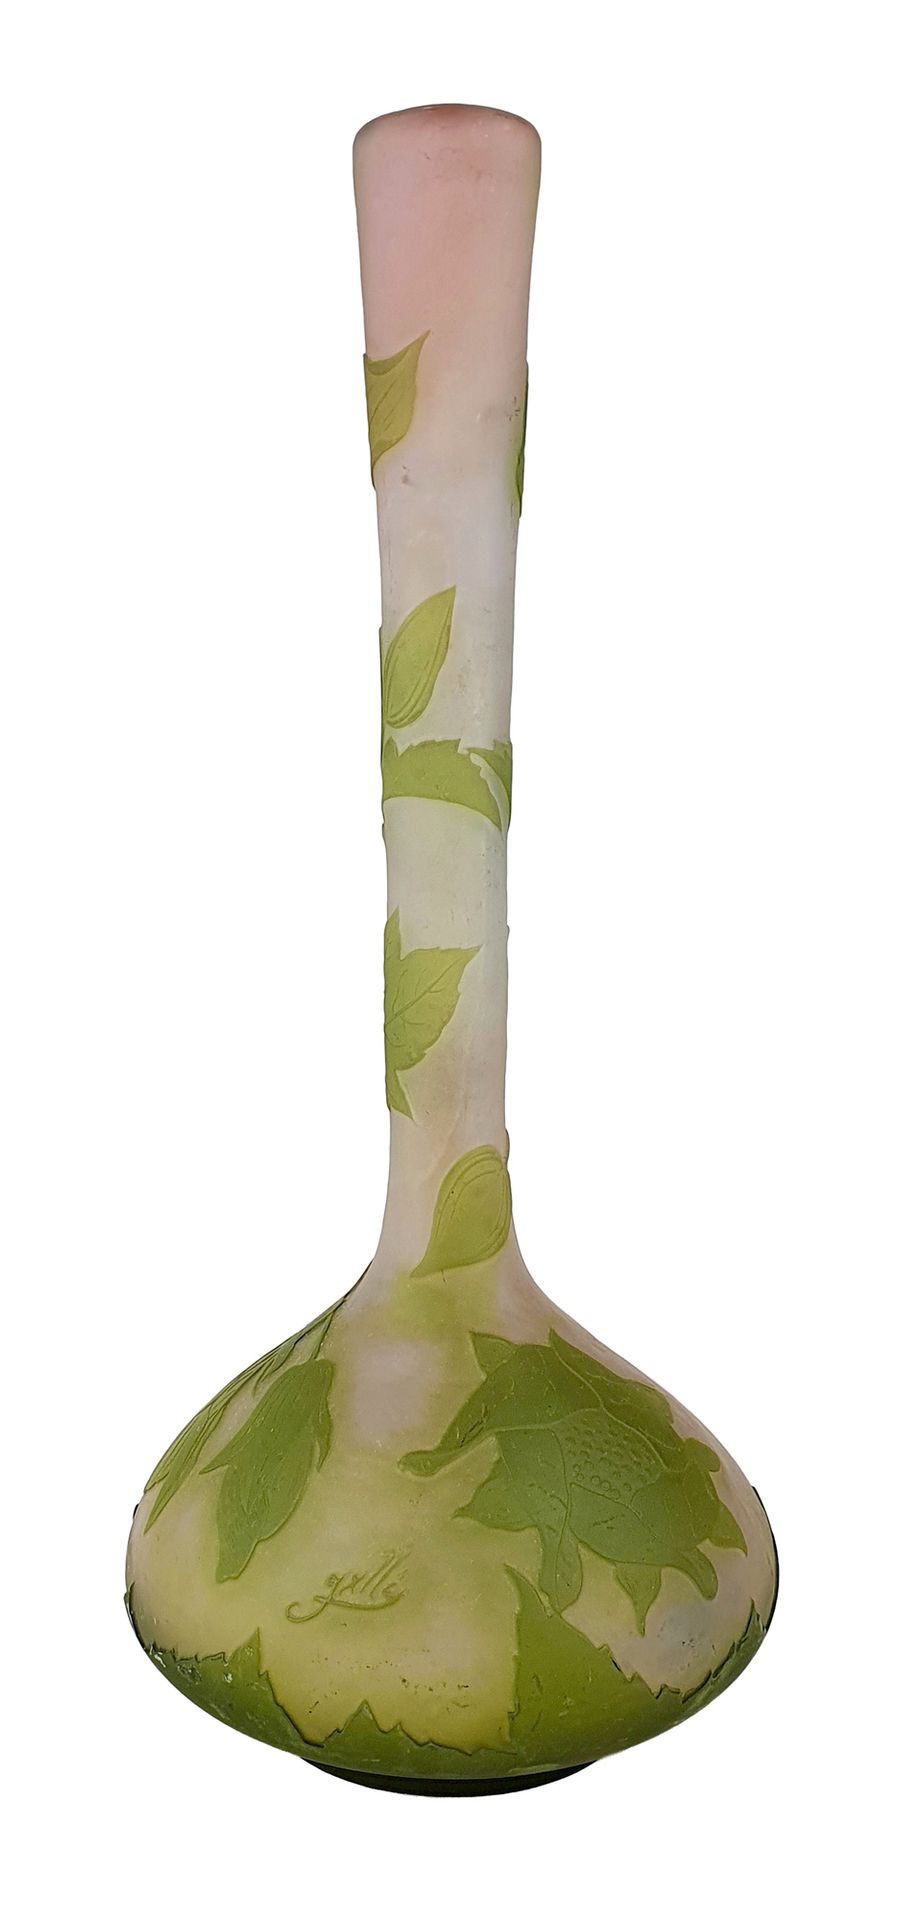 Émile GALLÉ (1846-1904) 埃米尔-加勒(1846-1904)

优雅的花瓶soliflore

----------

玻璃浆中，有酸蚀的&hellip;